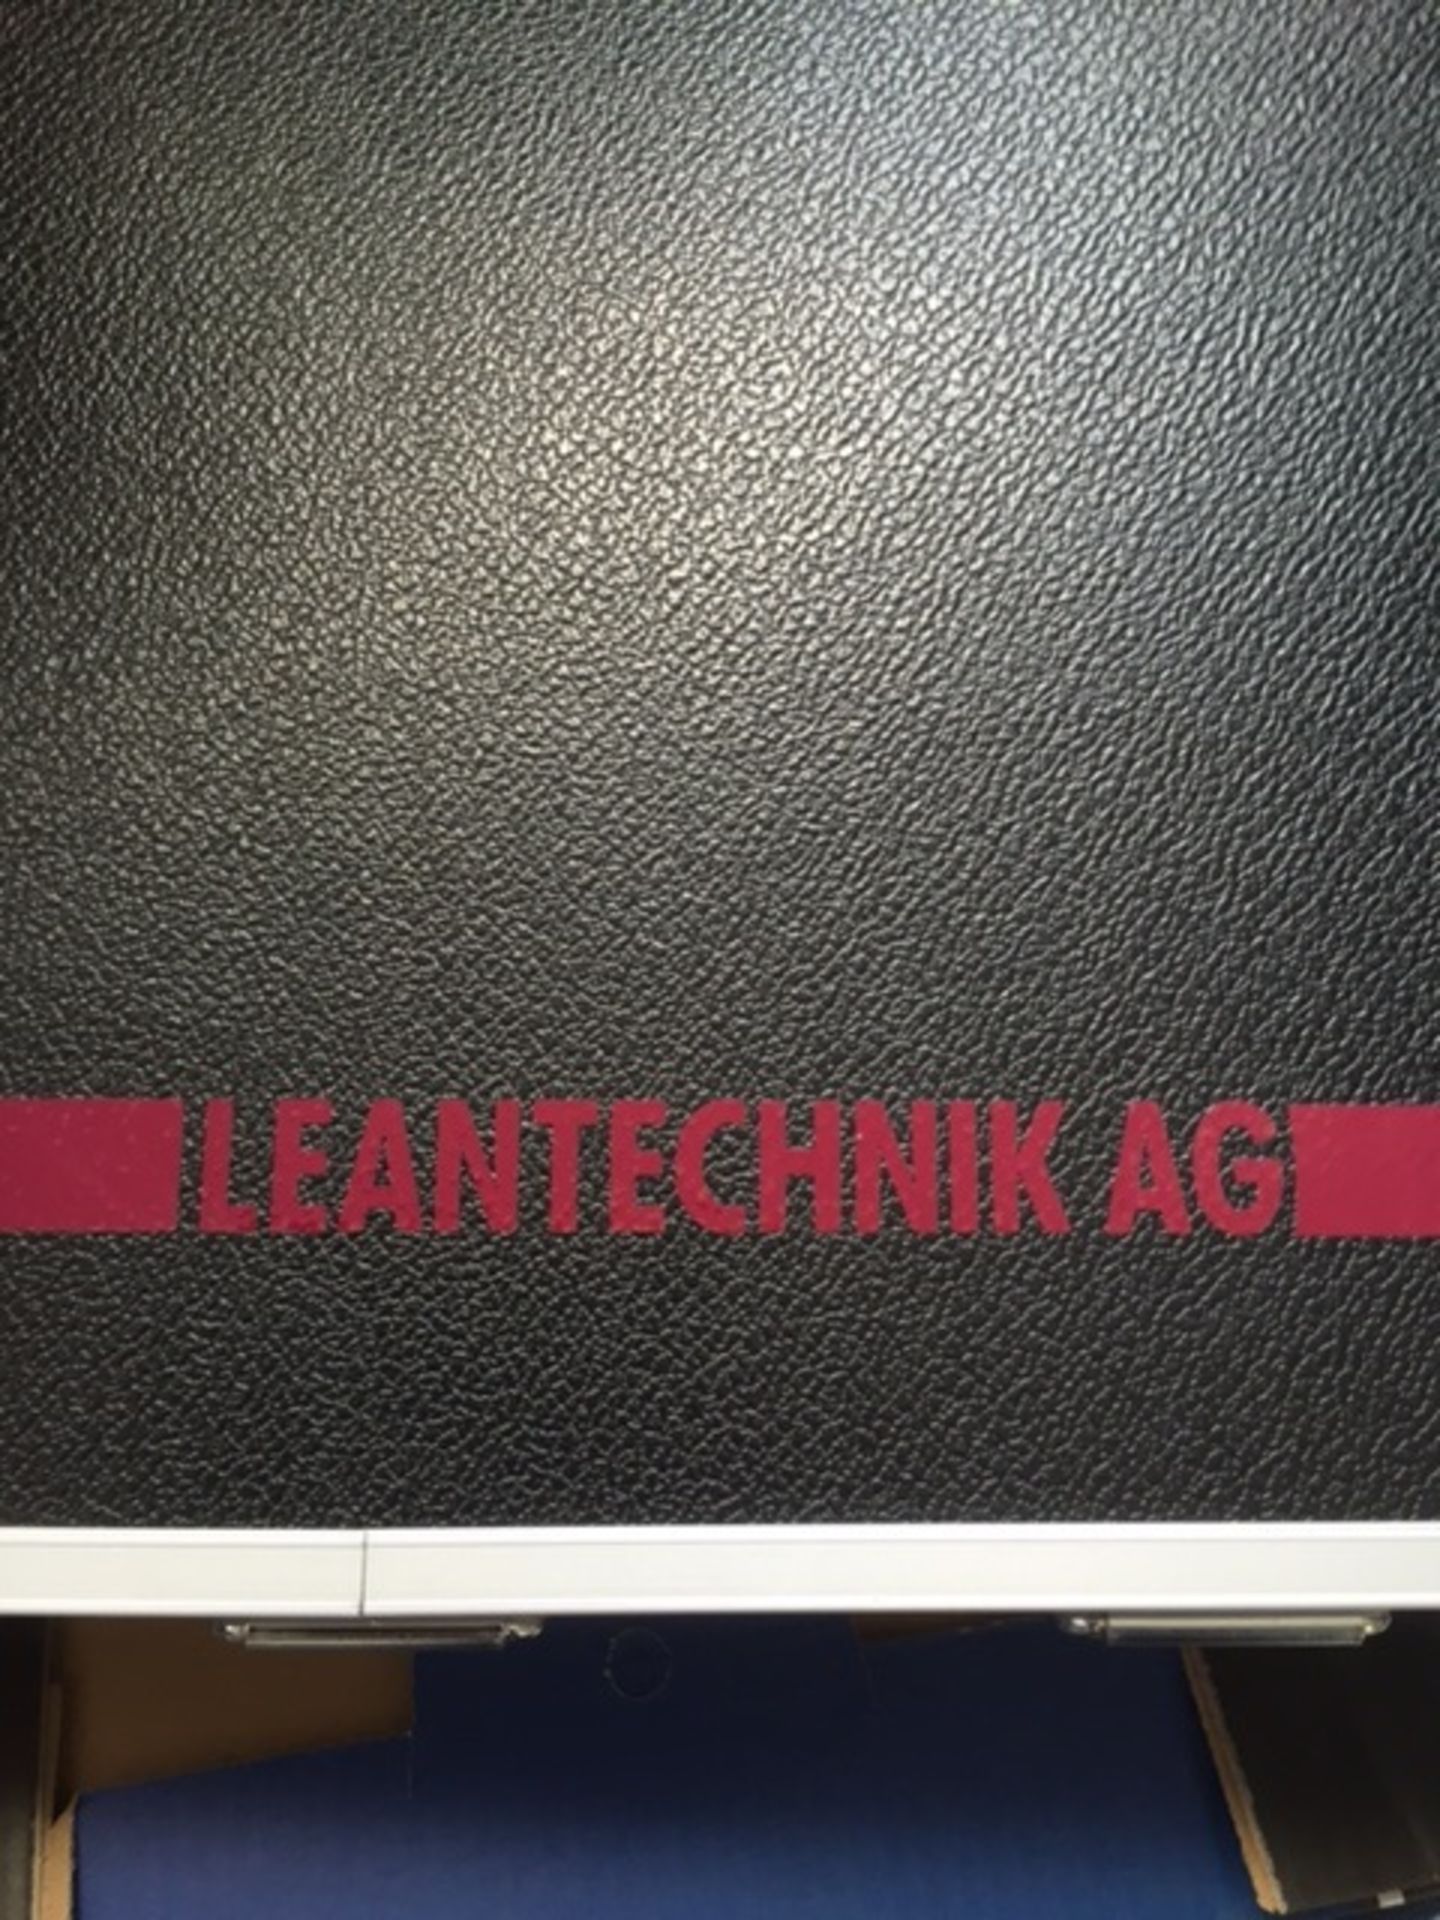 Leantechnika Gear Technology - Image 2 of 2